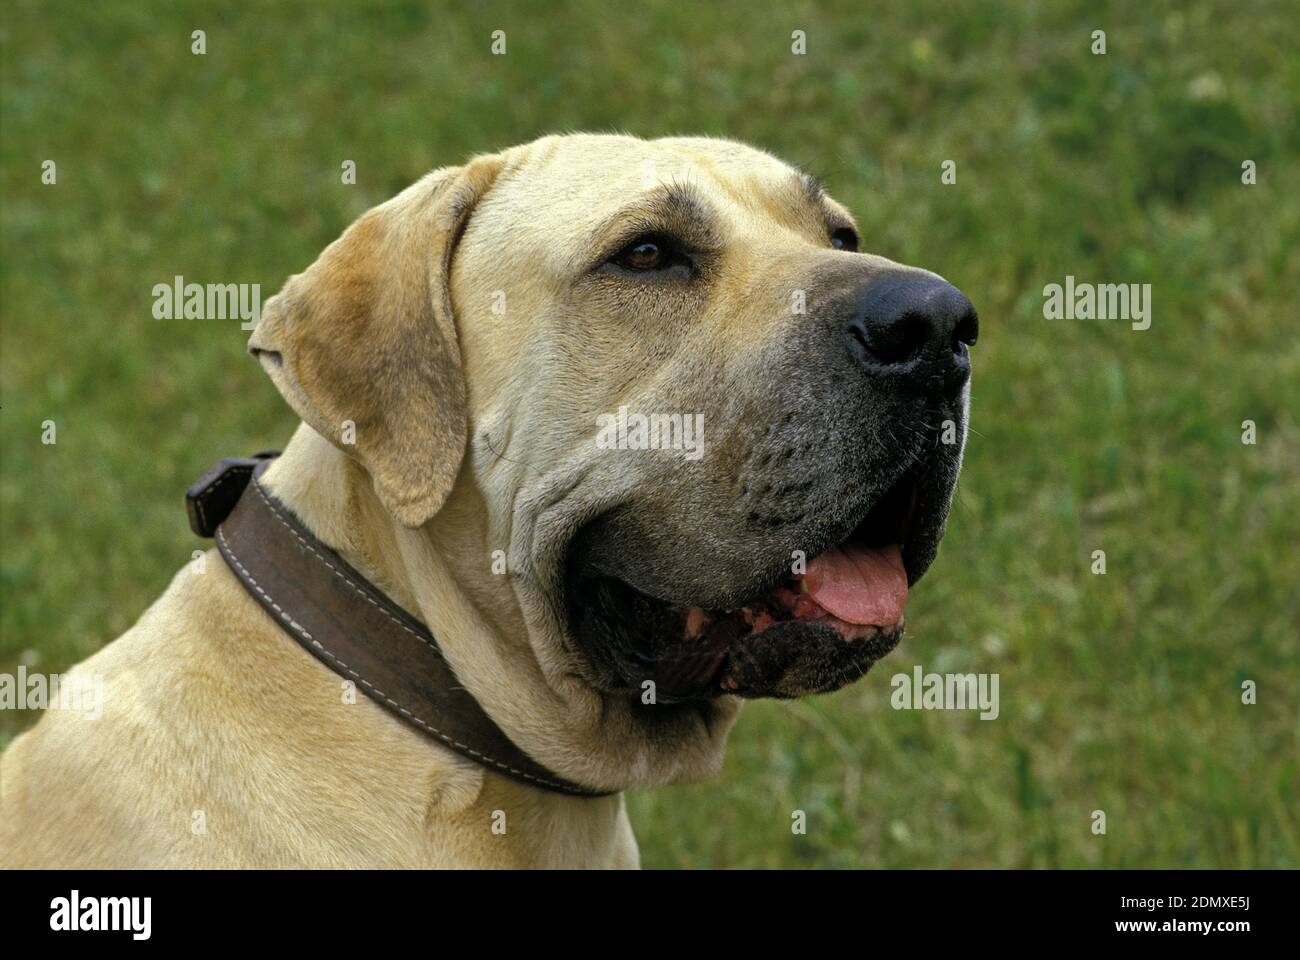 https://c8.alamy.com/comp/2DMXE5J/fila-brasileiro-a-dog-breed-from-brazil-2DMXE5J.jpg